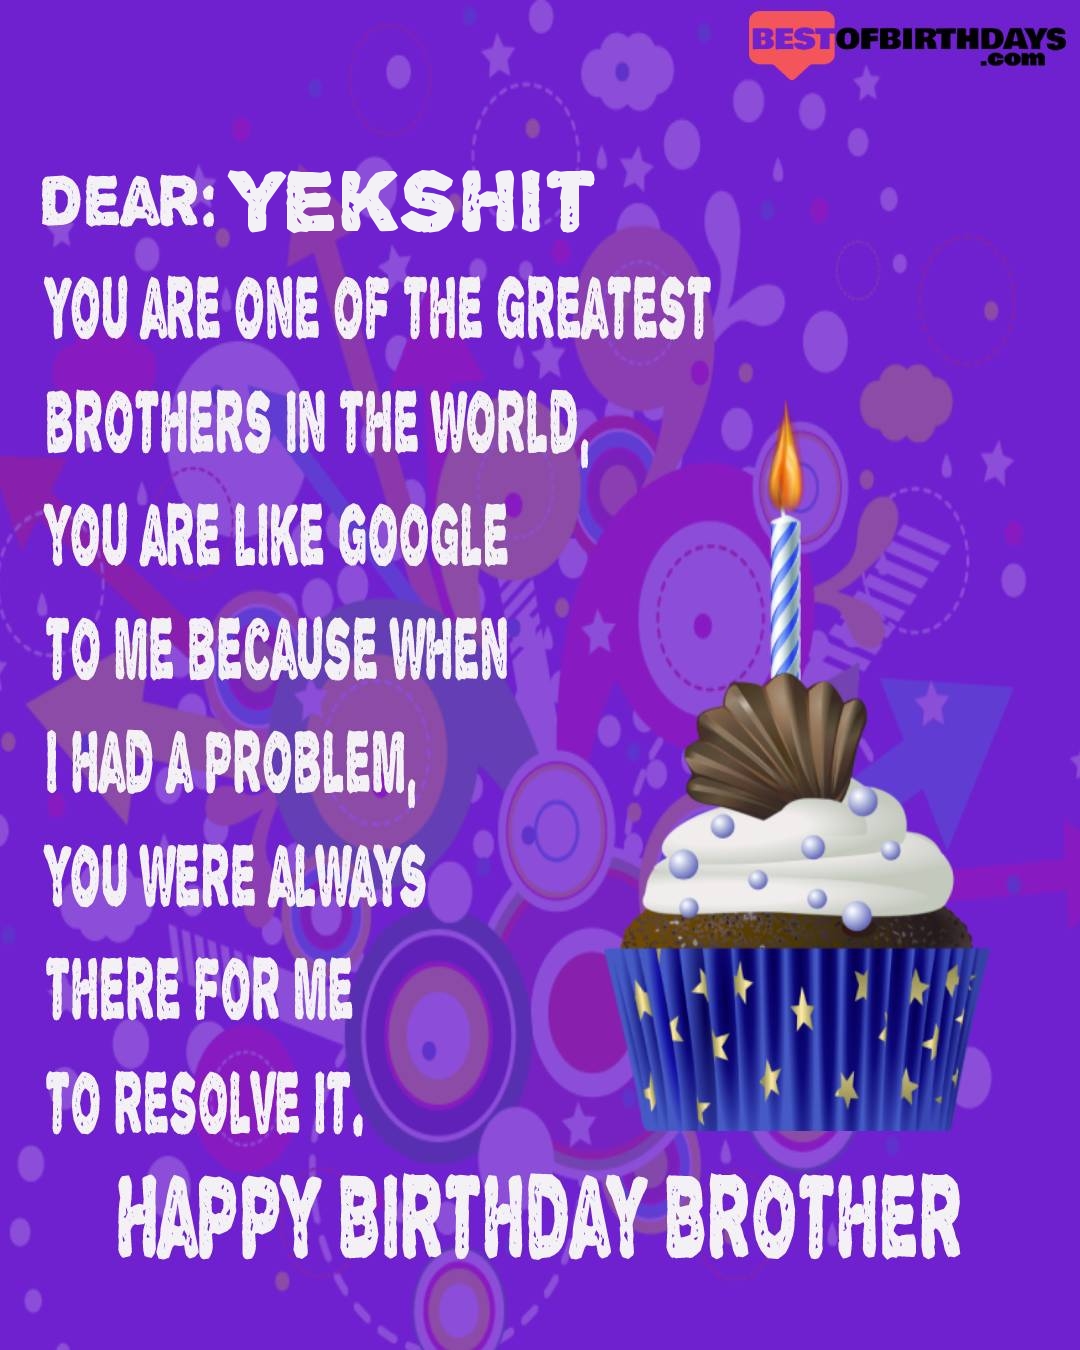 Happy birthday yekshit bhai brother bro